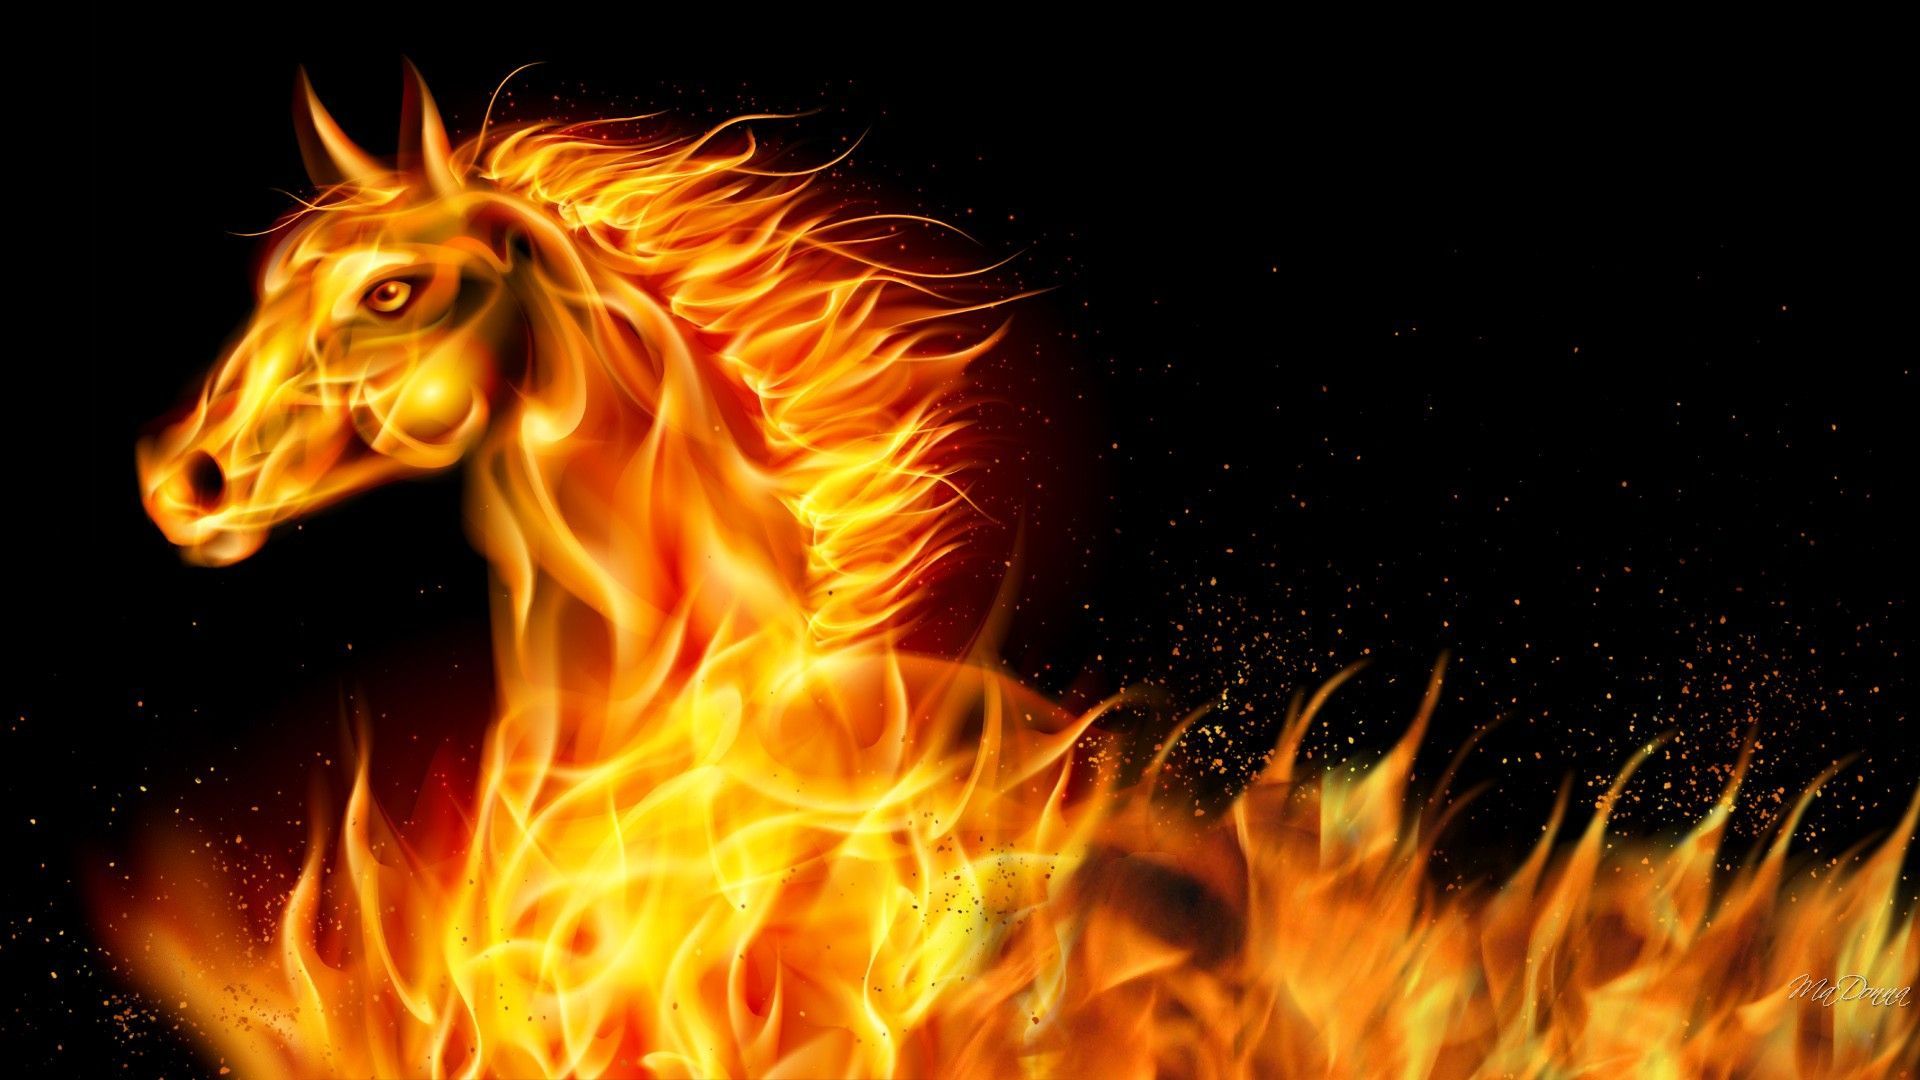 Horses Flaming Horse Flames Year Hot 2014 Abstract New Bright Free